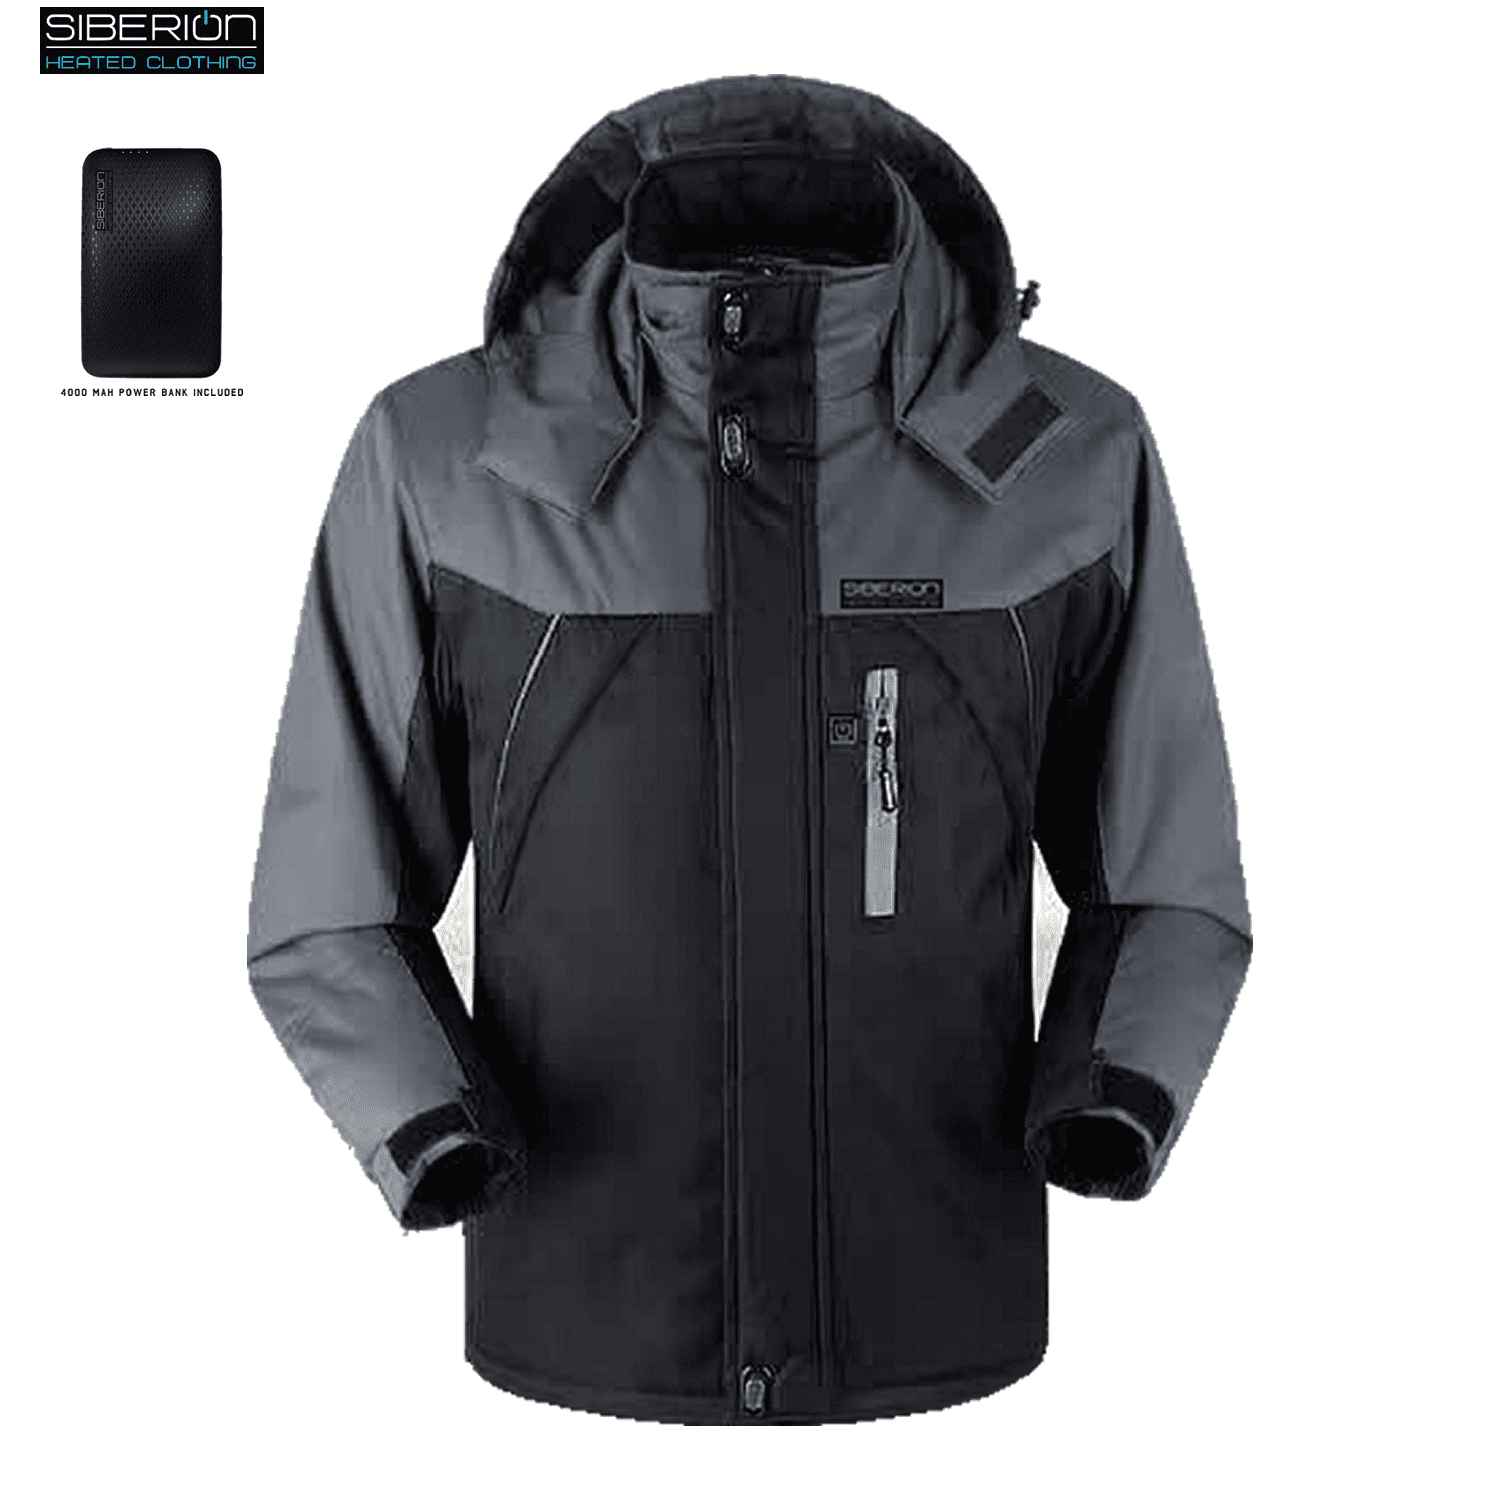 SubZero Heated Winter Ski Coat Jacket - 3 Active Carbon Fiber Heat ...